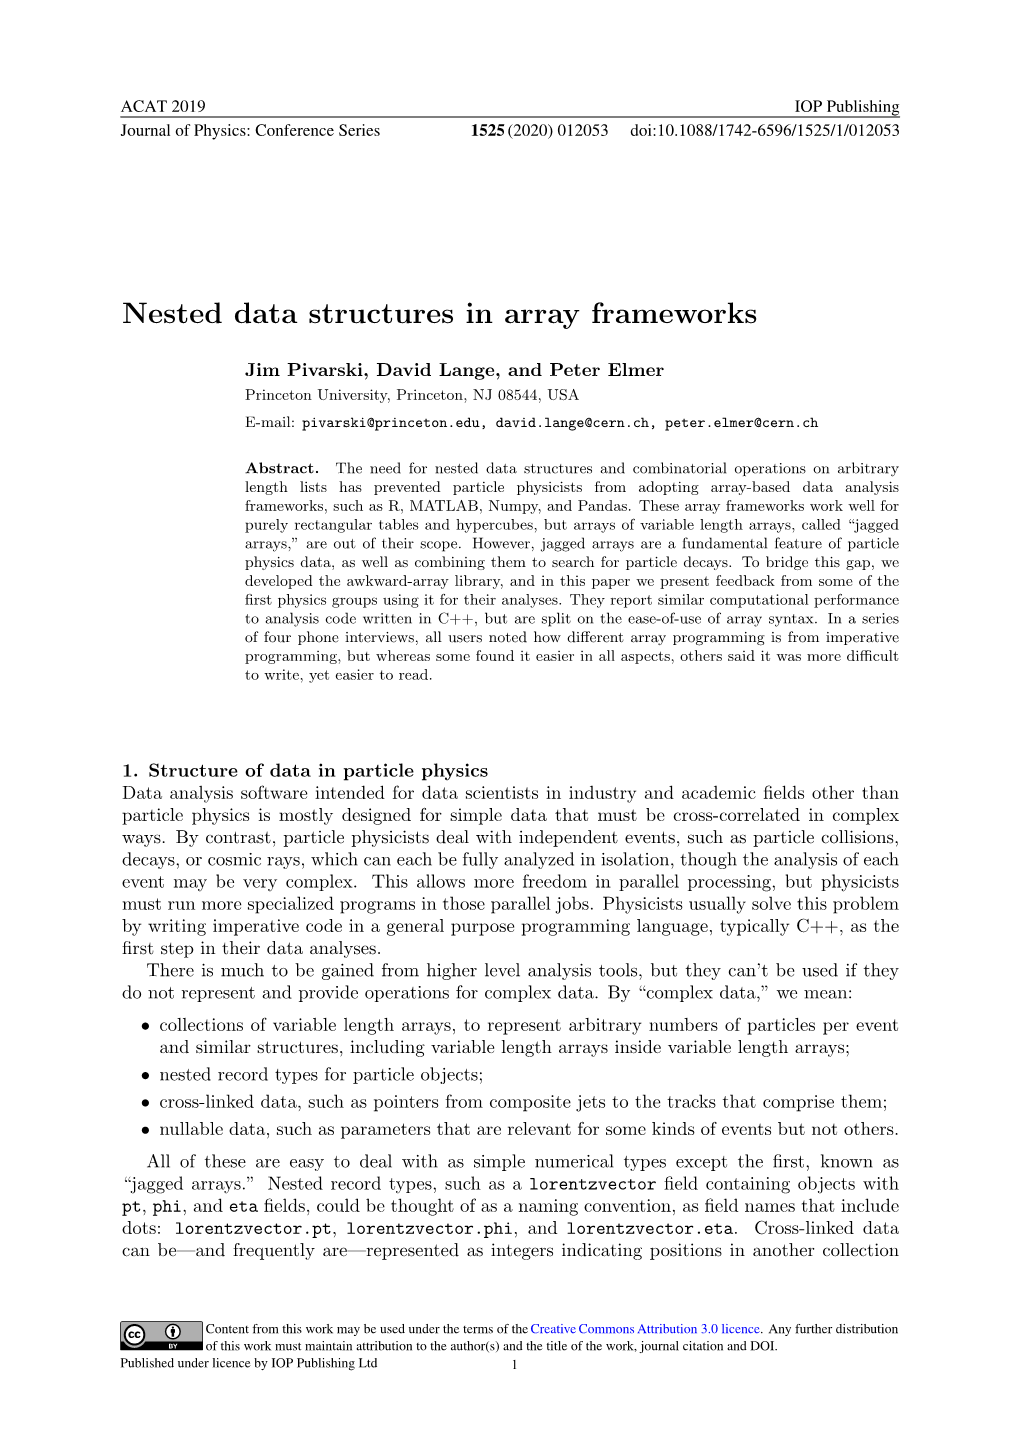 Nested Data Structures in Array Frameworks